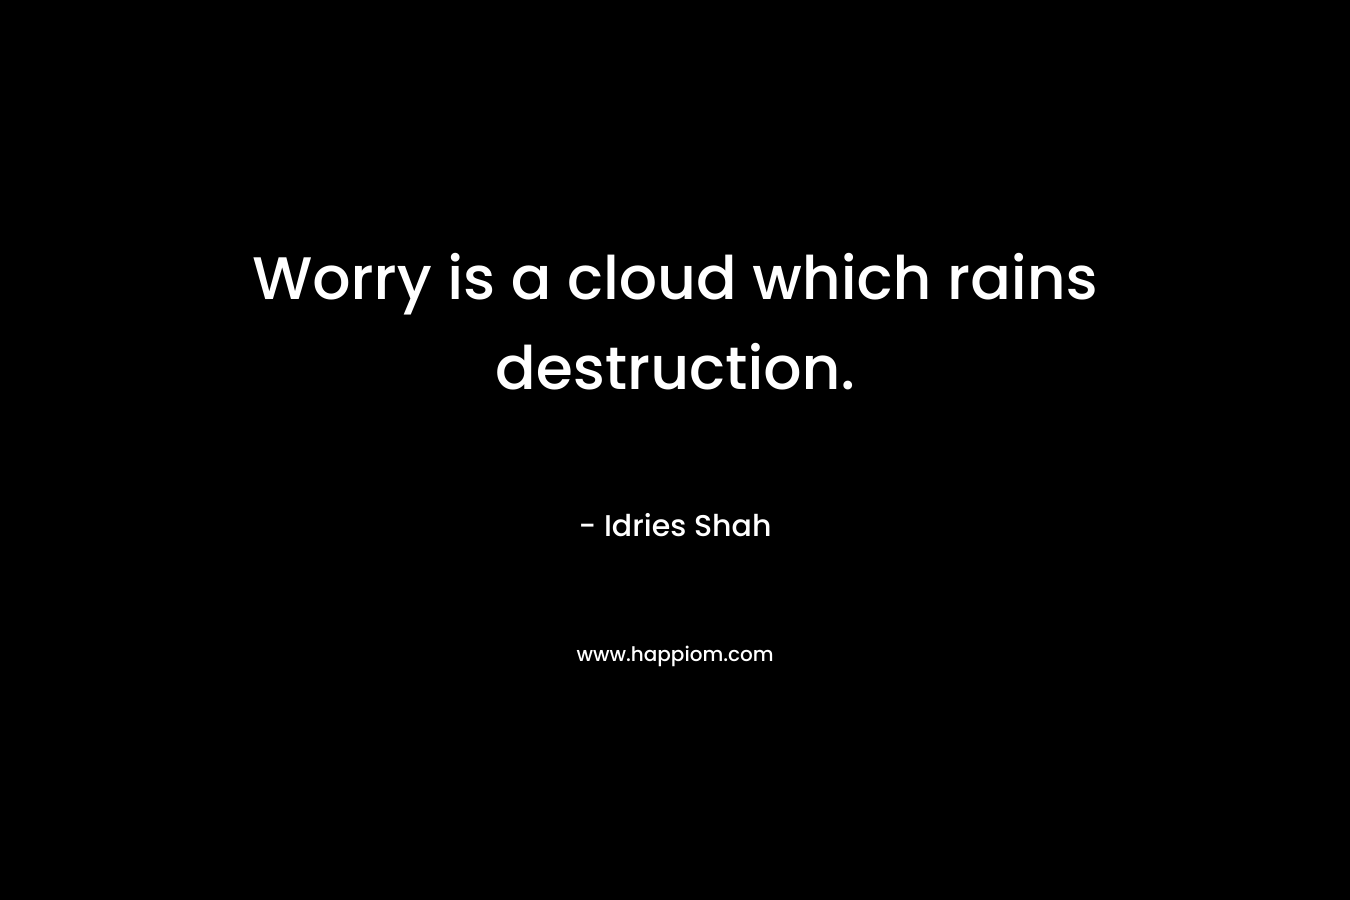 Worry is a cloud which rains destruction.